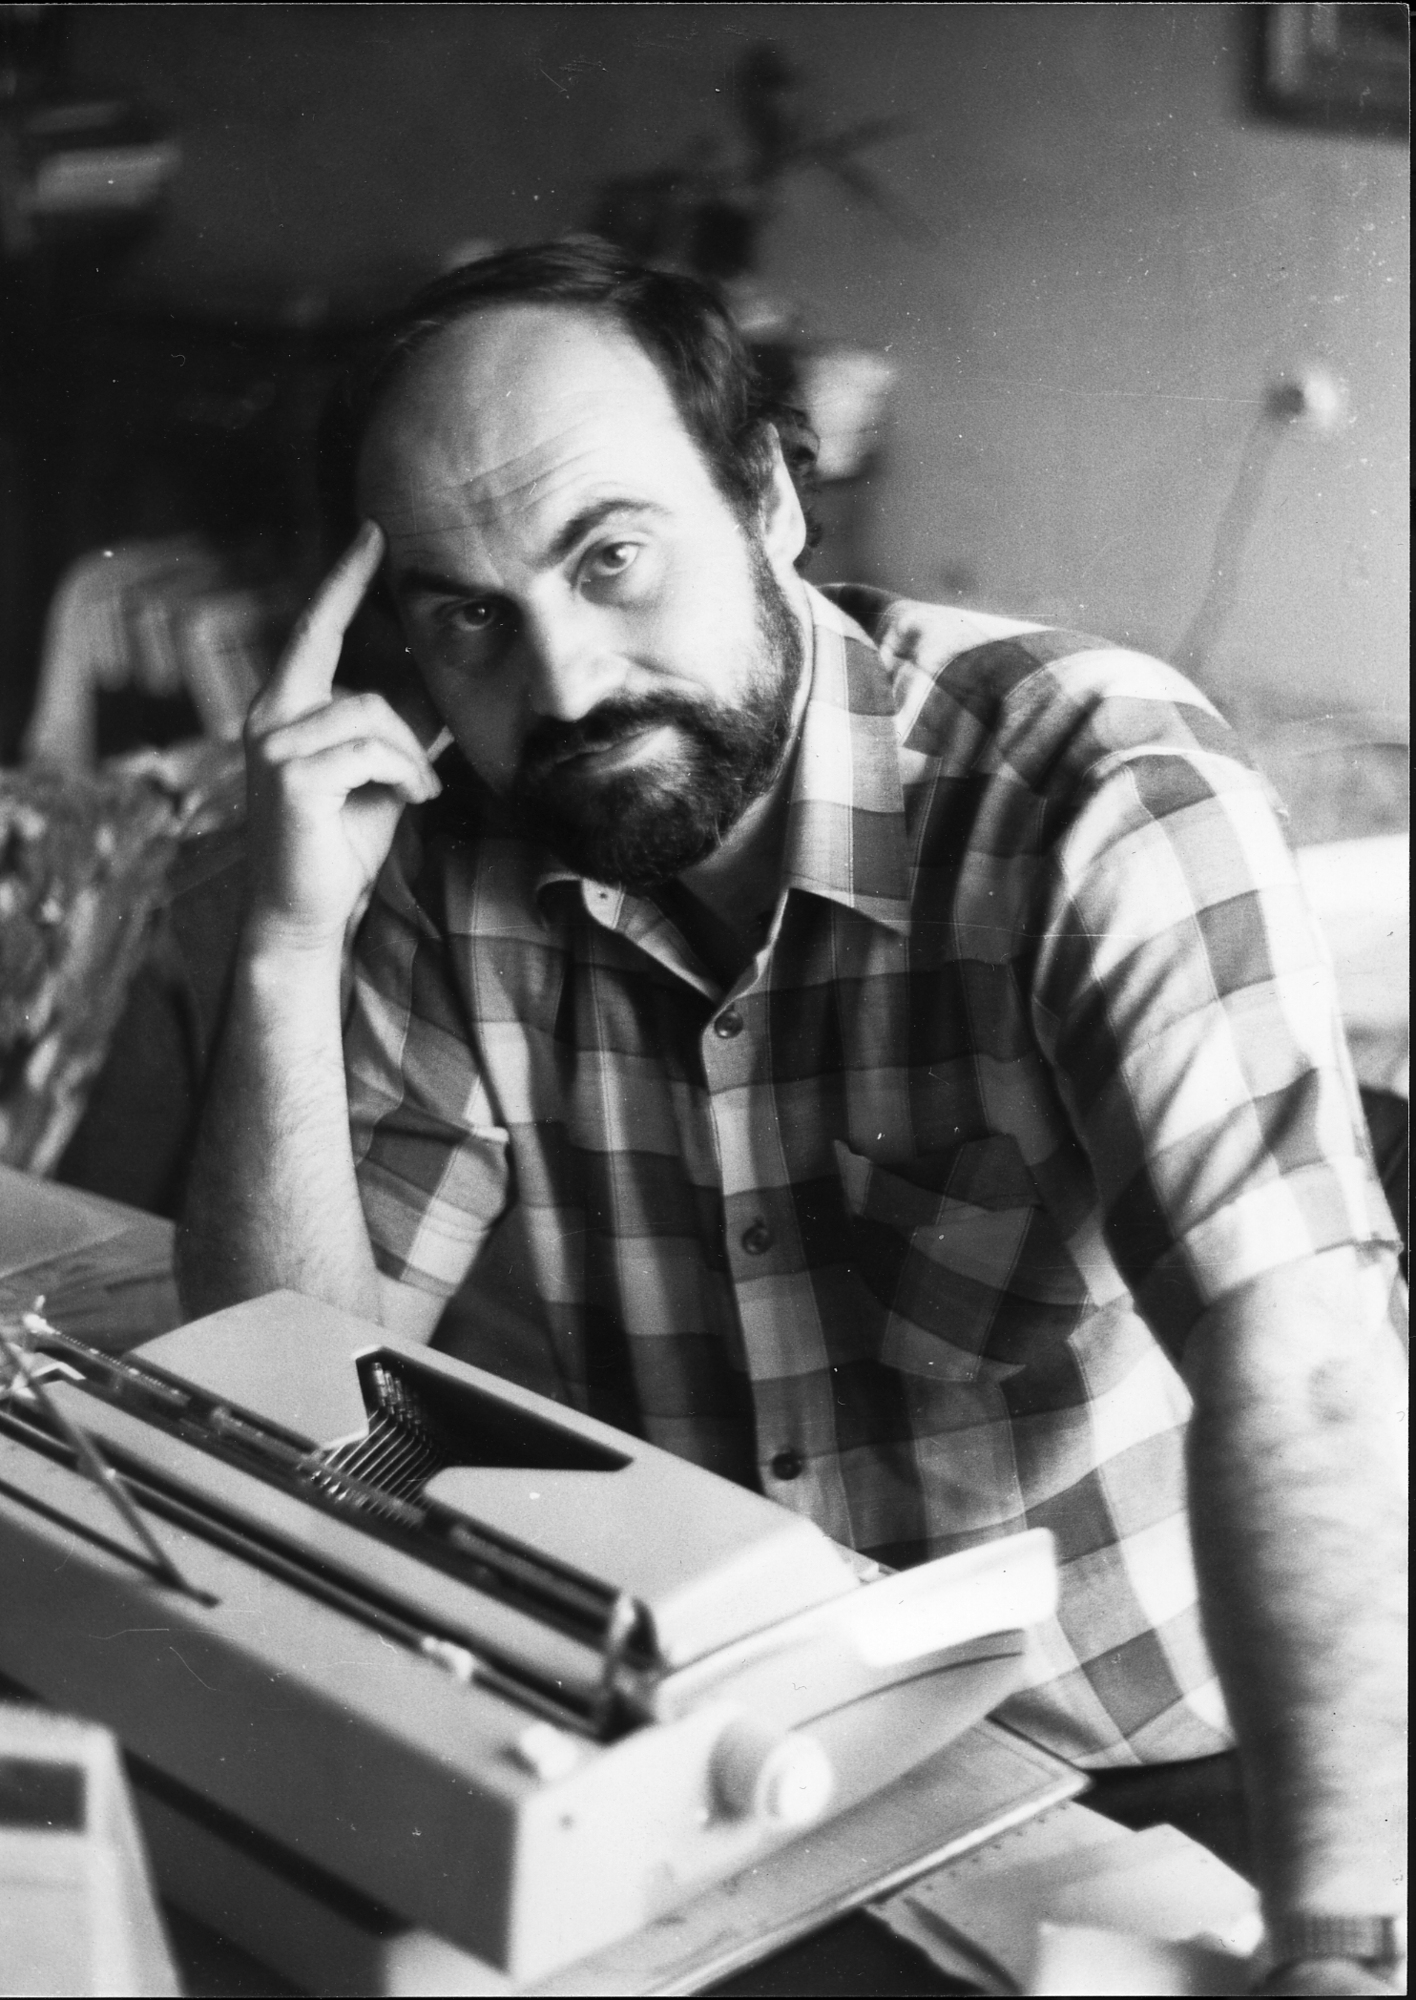 Tomáš Halík working in 1978